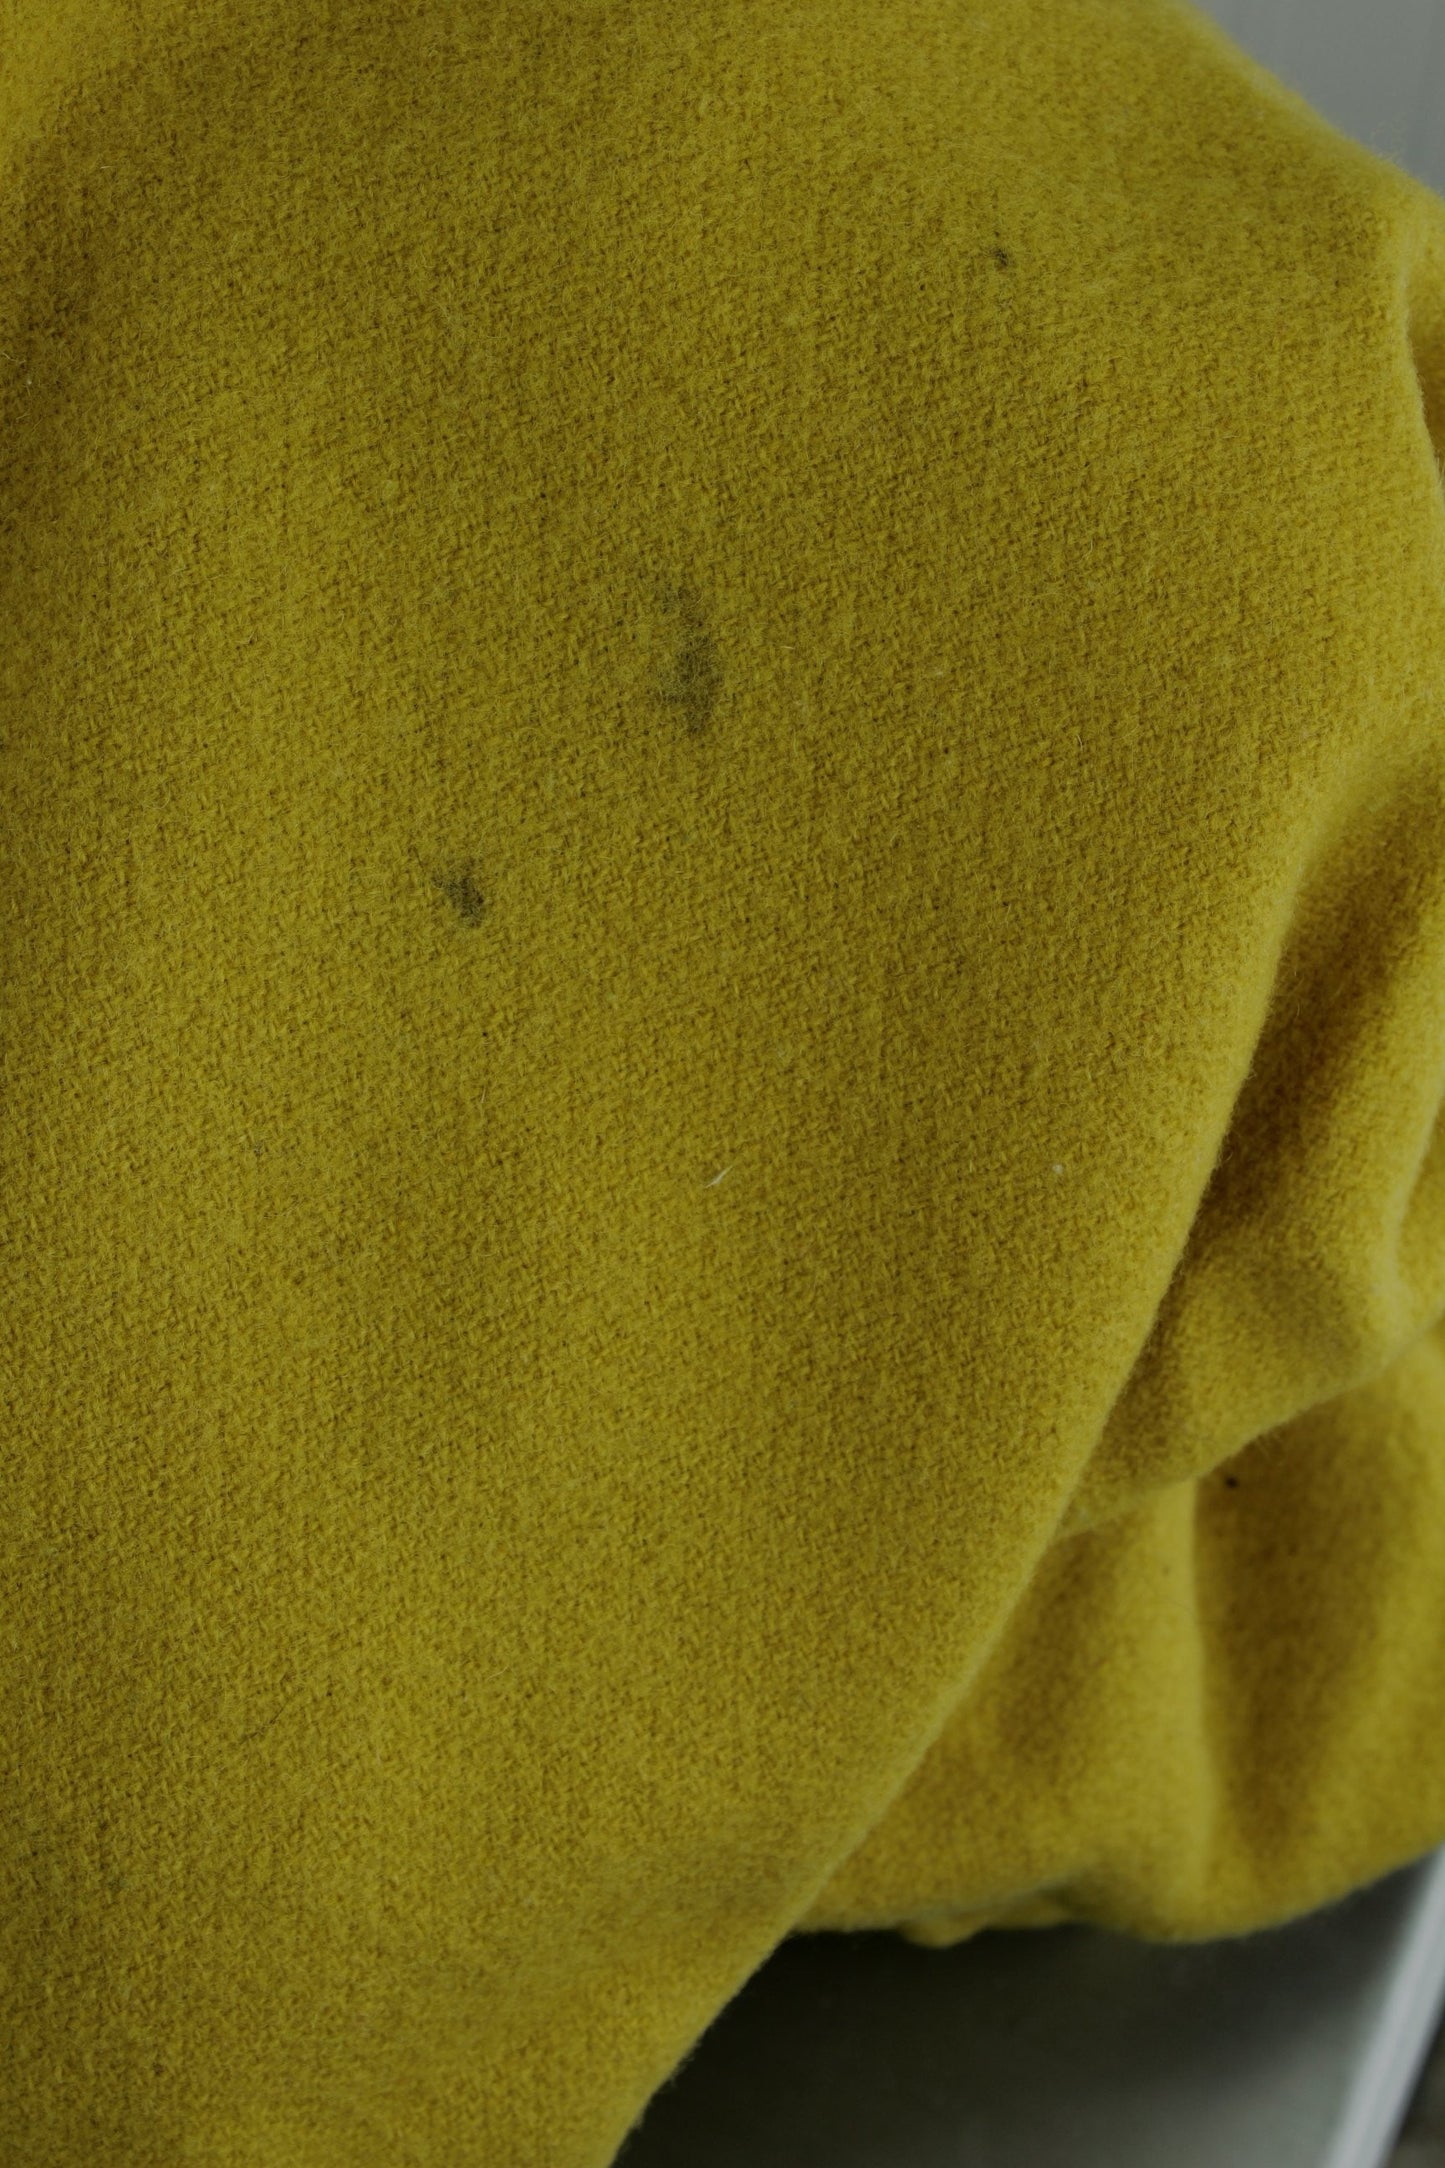 Faribo 100% Wool Blanket Dijon Mustard  Gold Vintage 82" X 84" Wide Satin Binding 3" big